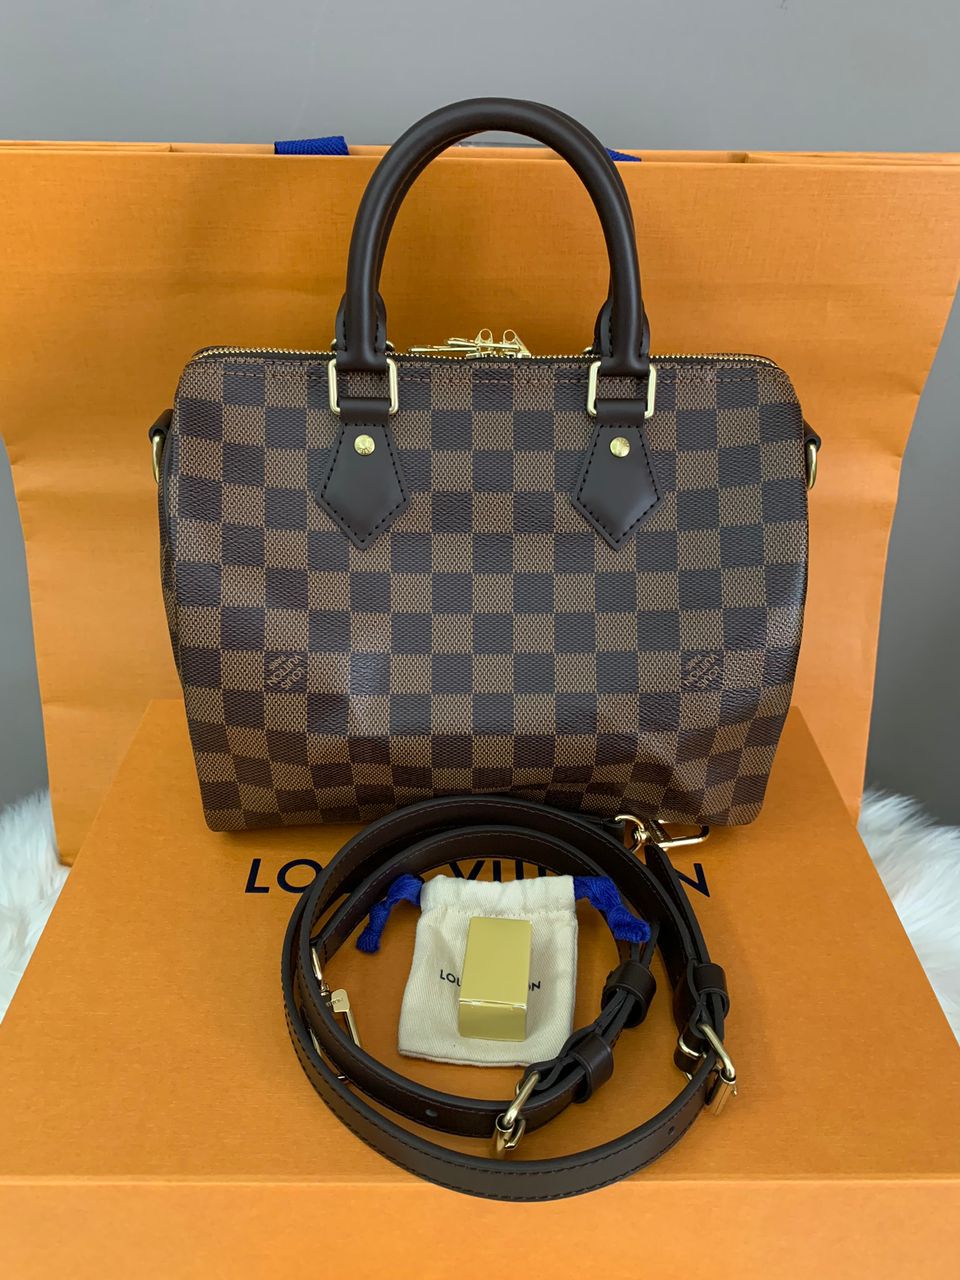 Authentic Brand new Louis Vuitton Speedy 25 damier ebene  eBay